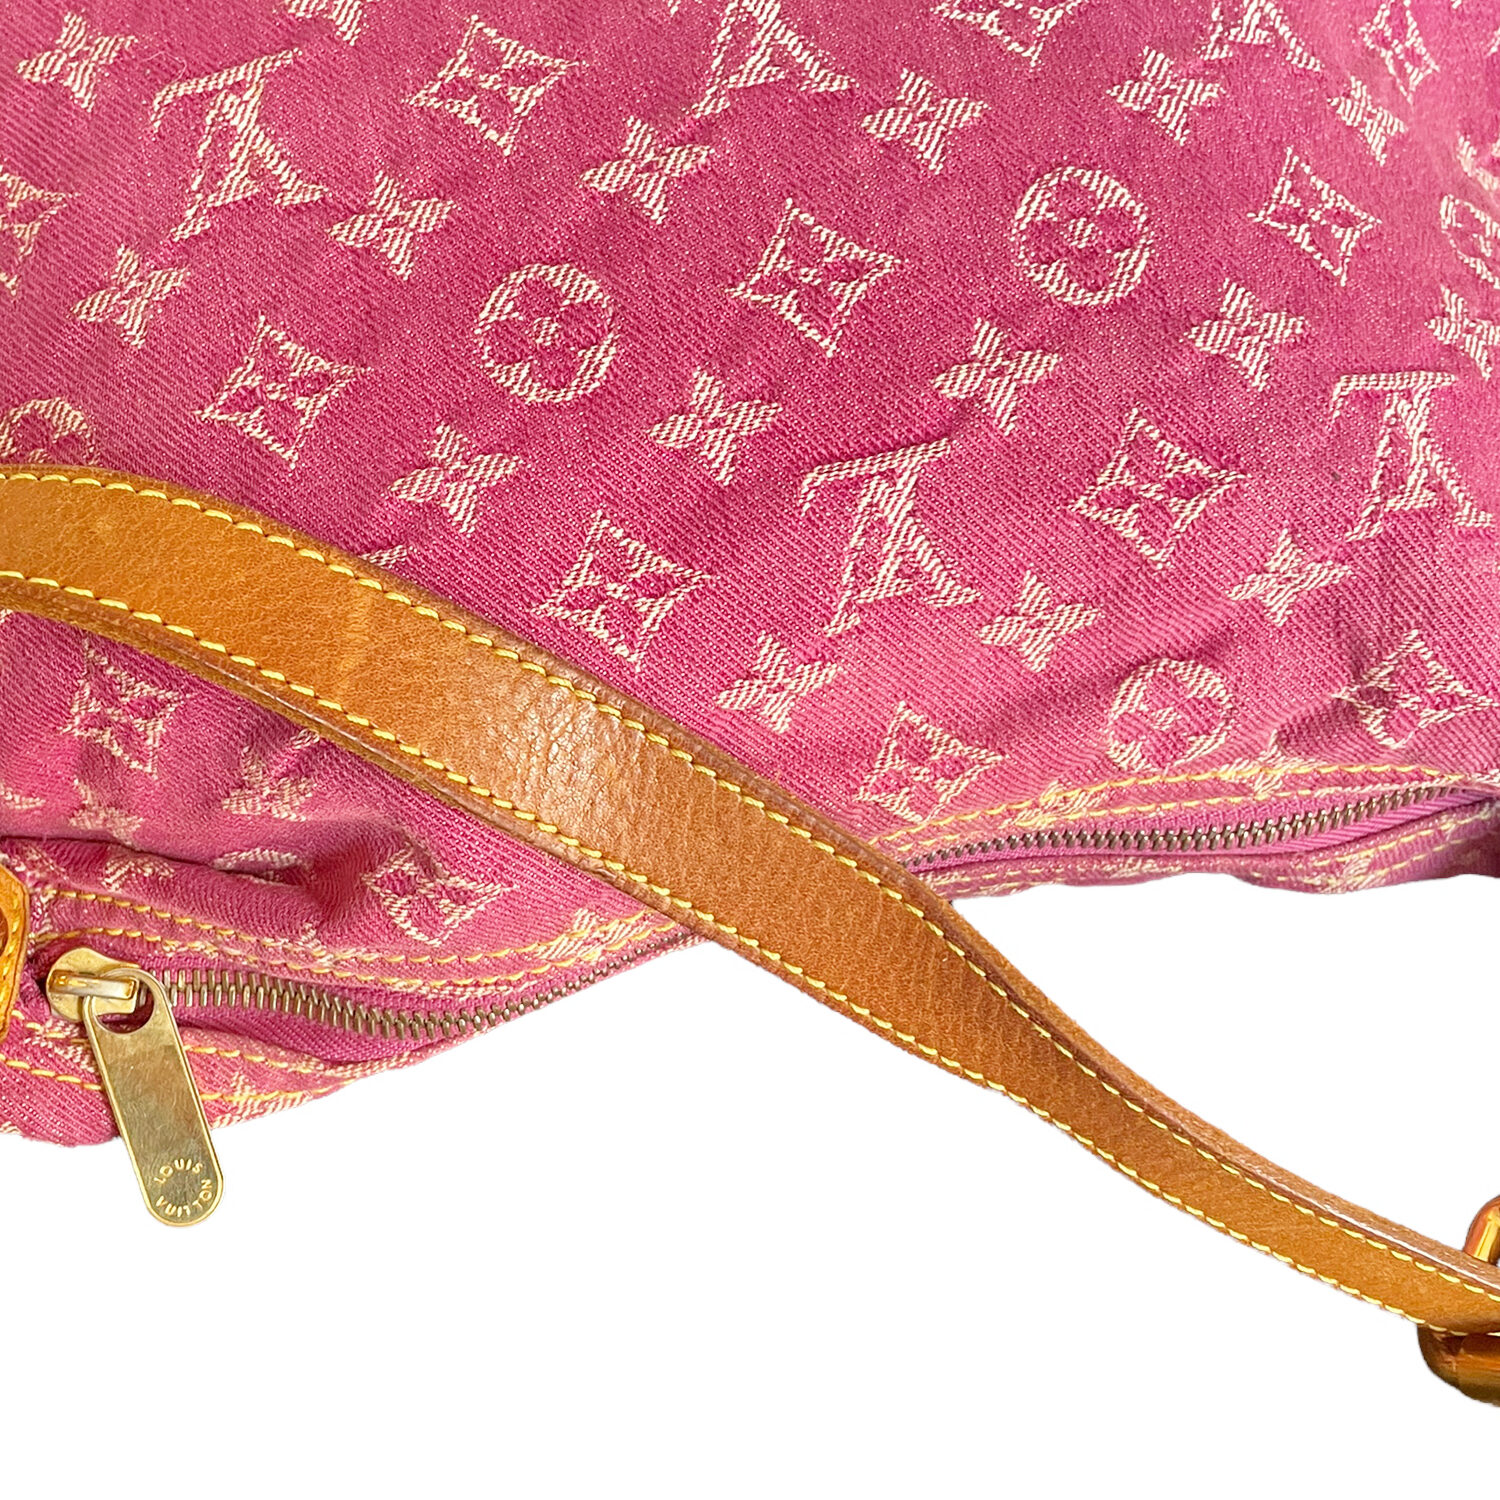 Baggy crossbody bag Louis Vuitton Pink in Denim - Jeans - 31884901